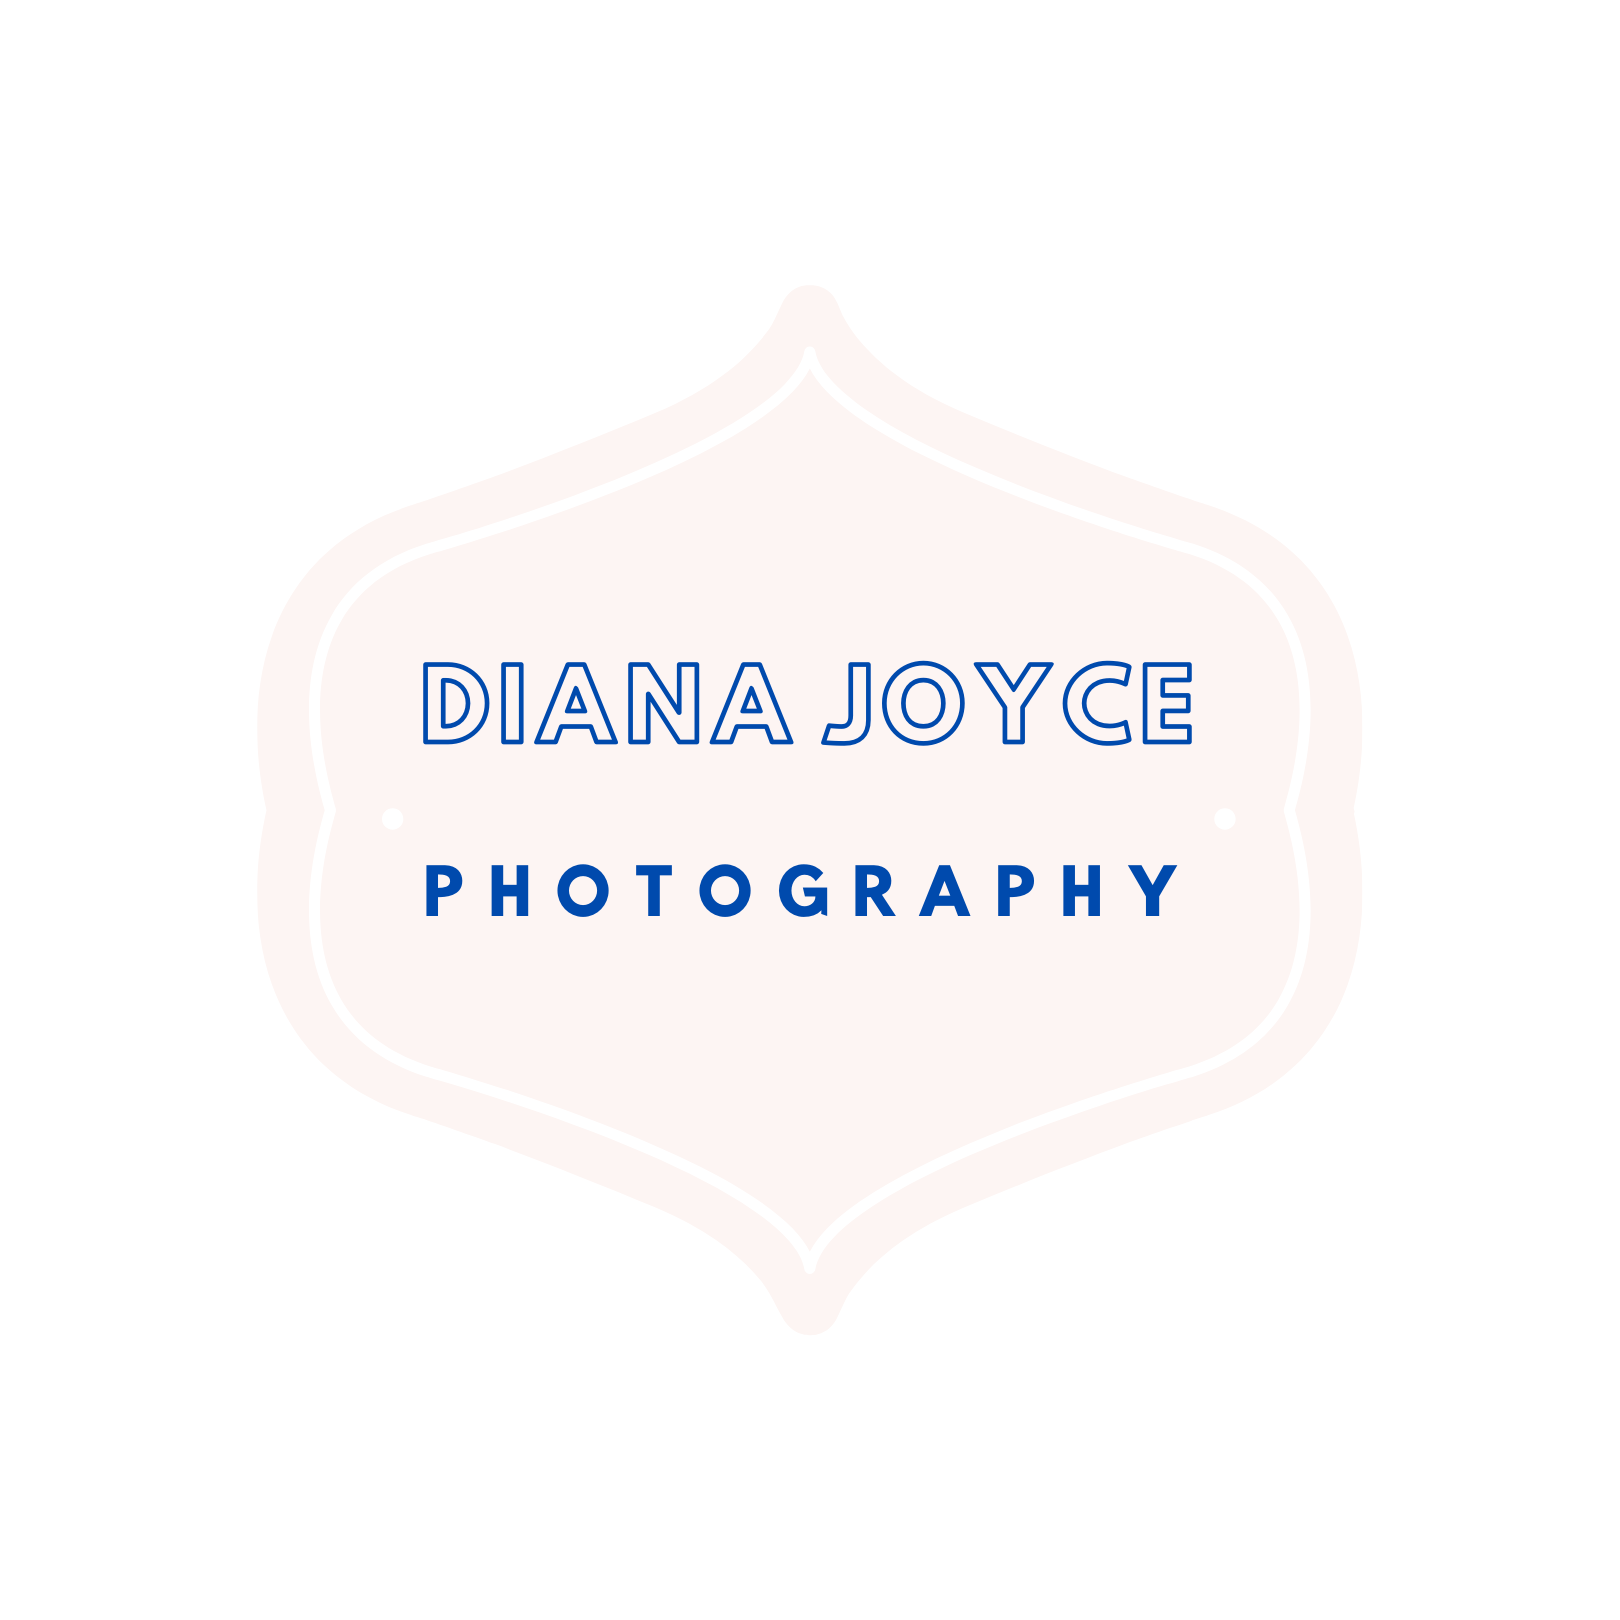 Diana Joyce Photography